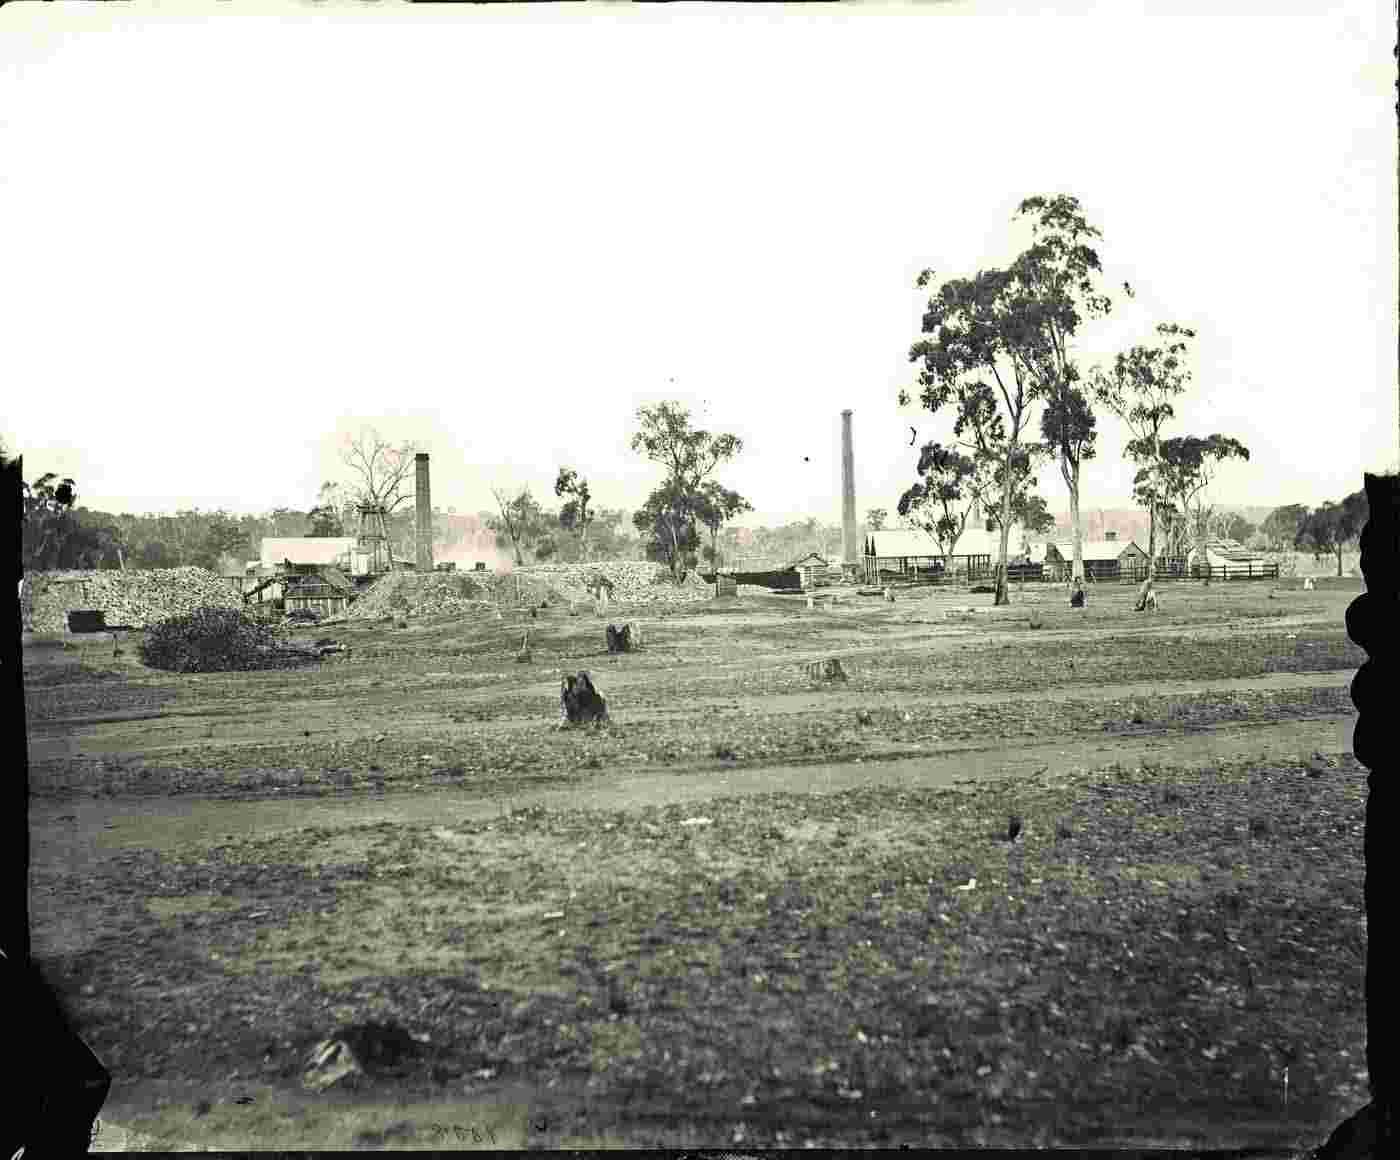 Goulburn. Gold mines, circa 1875